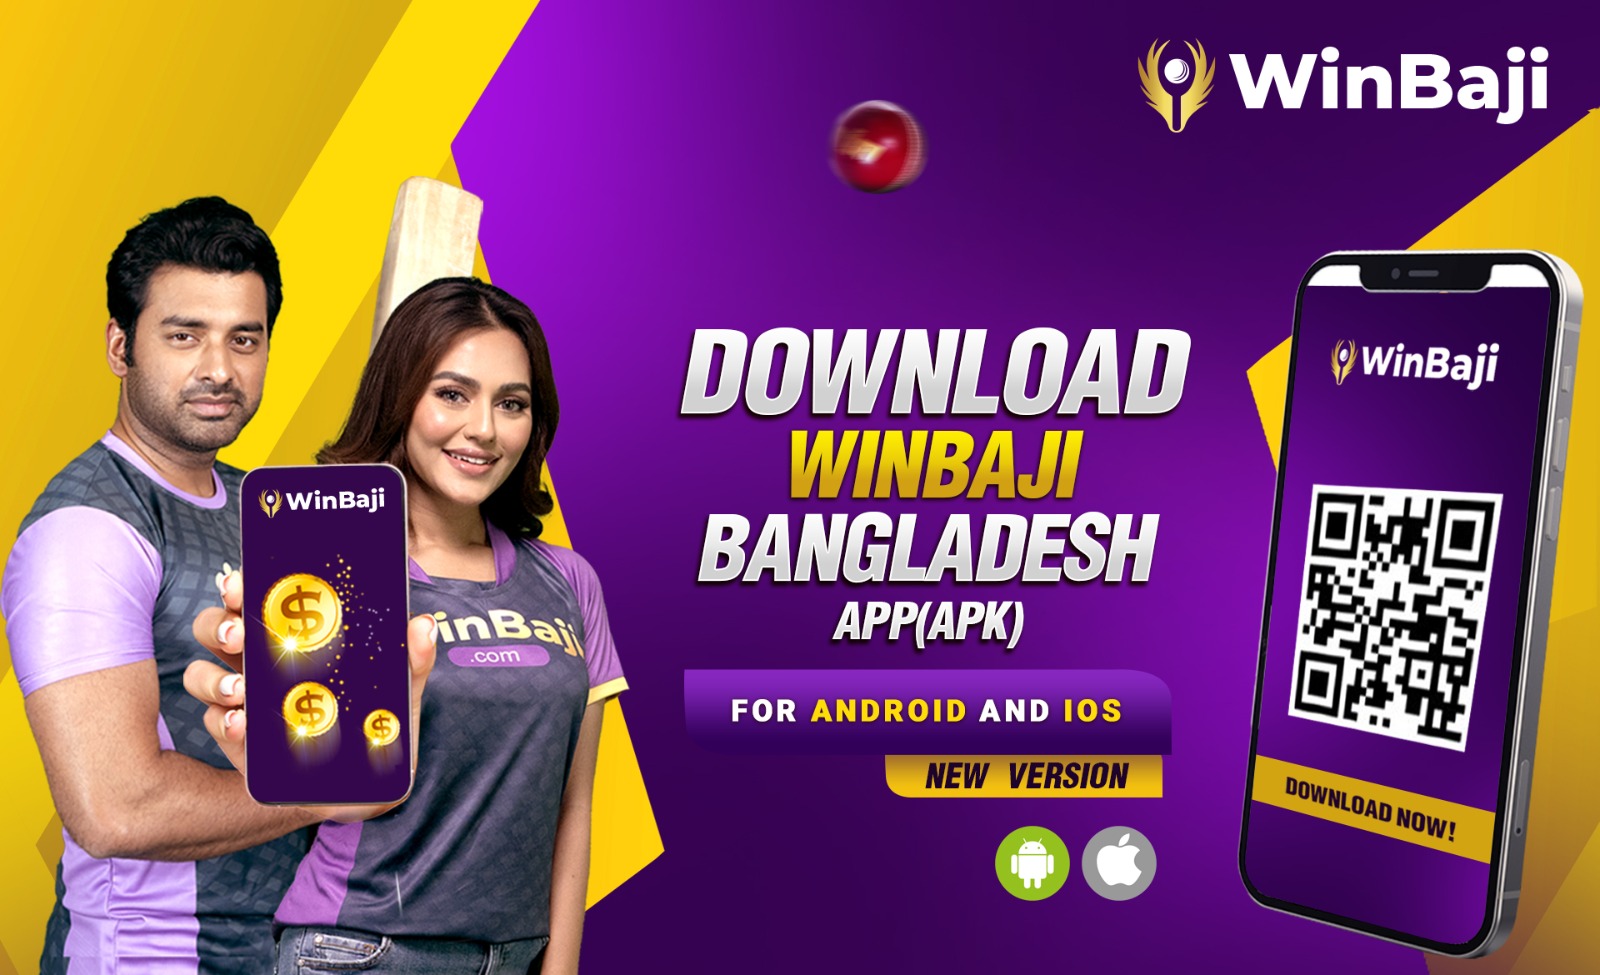 Download WinBaji Bangladesh App (APK) for Android & iOS New Version - Winbaji